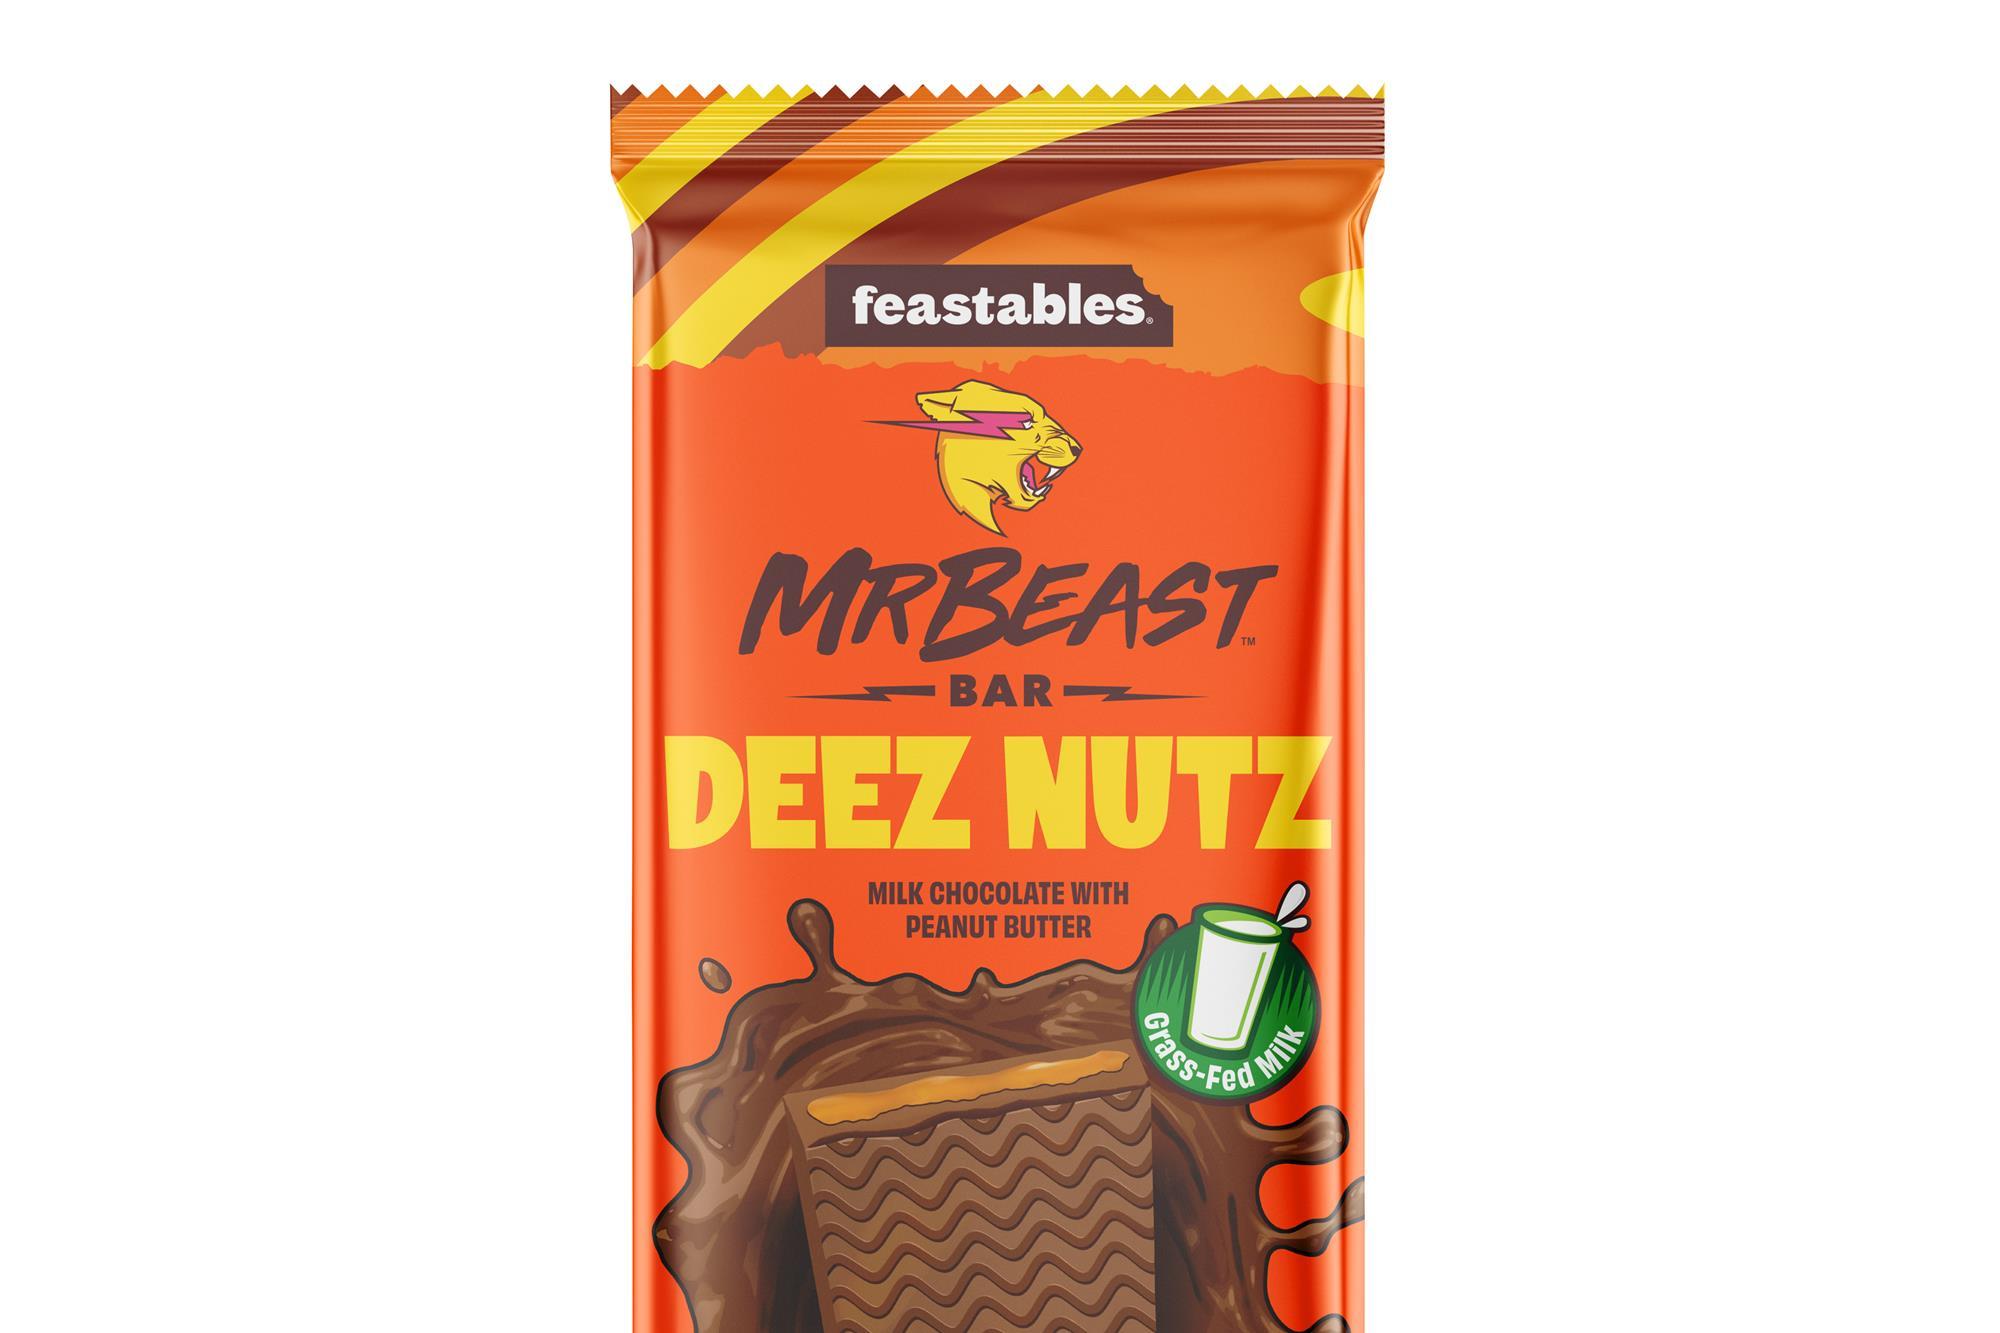  Feastables Beast Chocolate Bars – NEW Deez Nuts Peanut